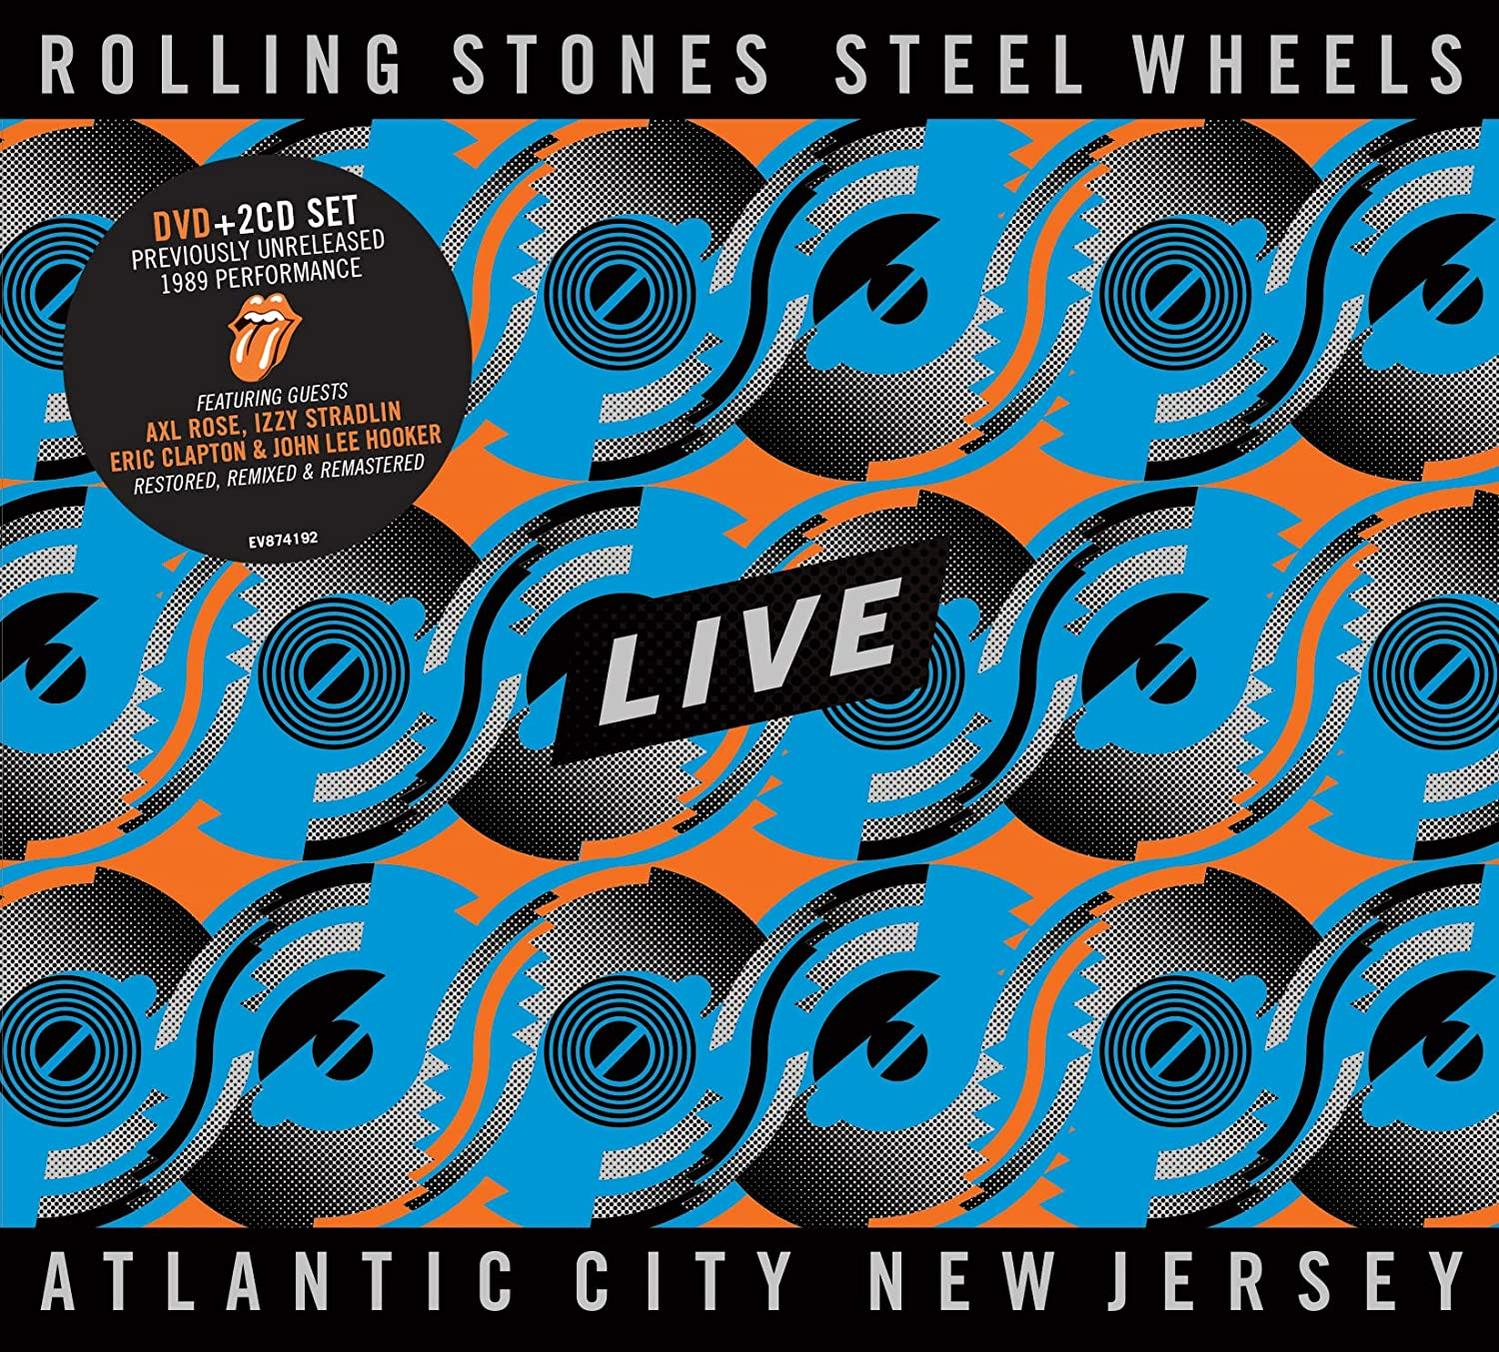 The Rolling Stones Live The Rolling City 1989) - Stones Wheels - + CD) (DVD Steel - (Atlantic